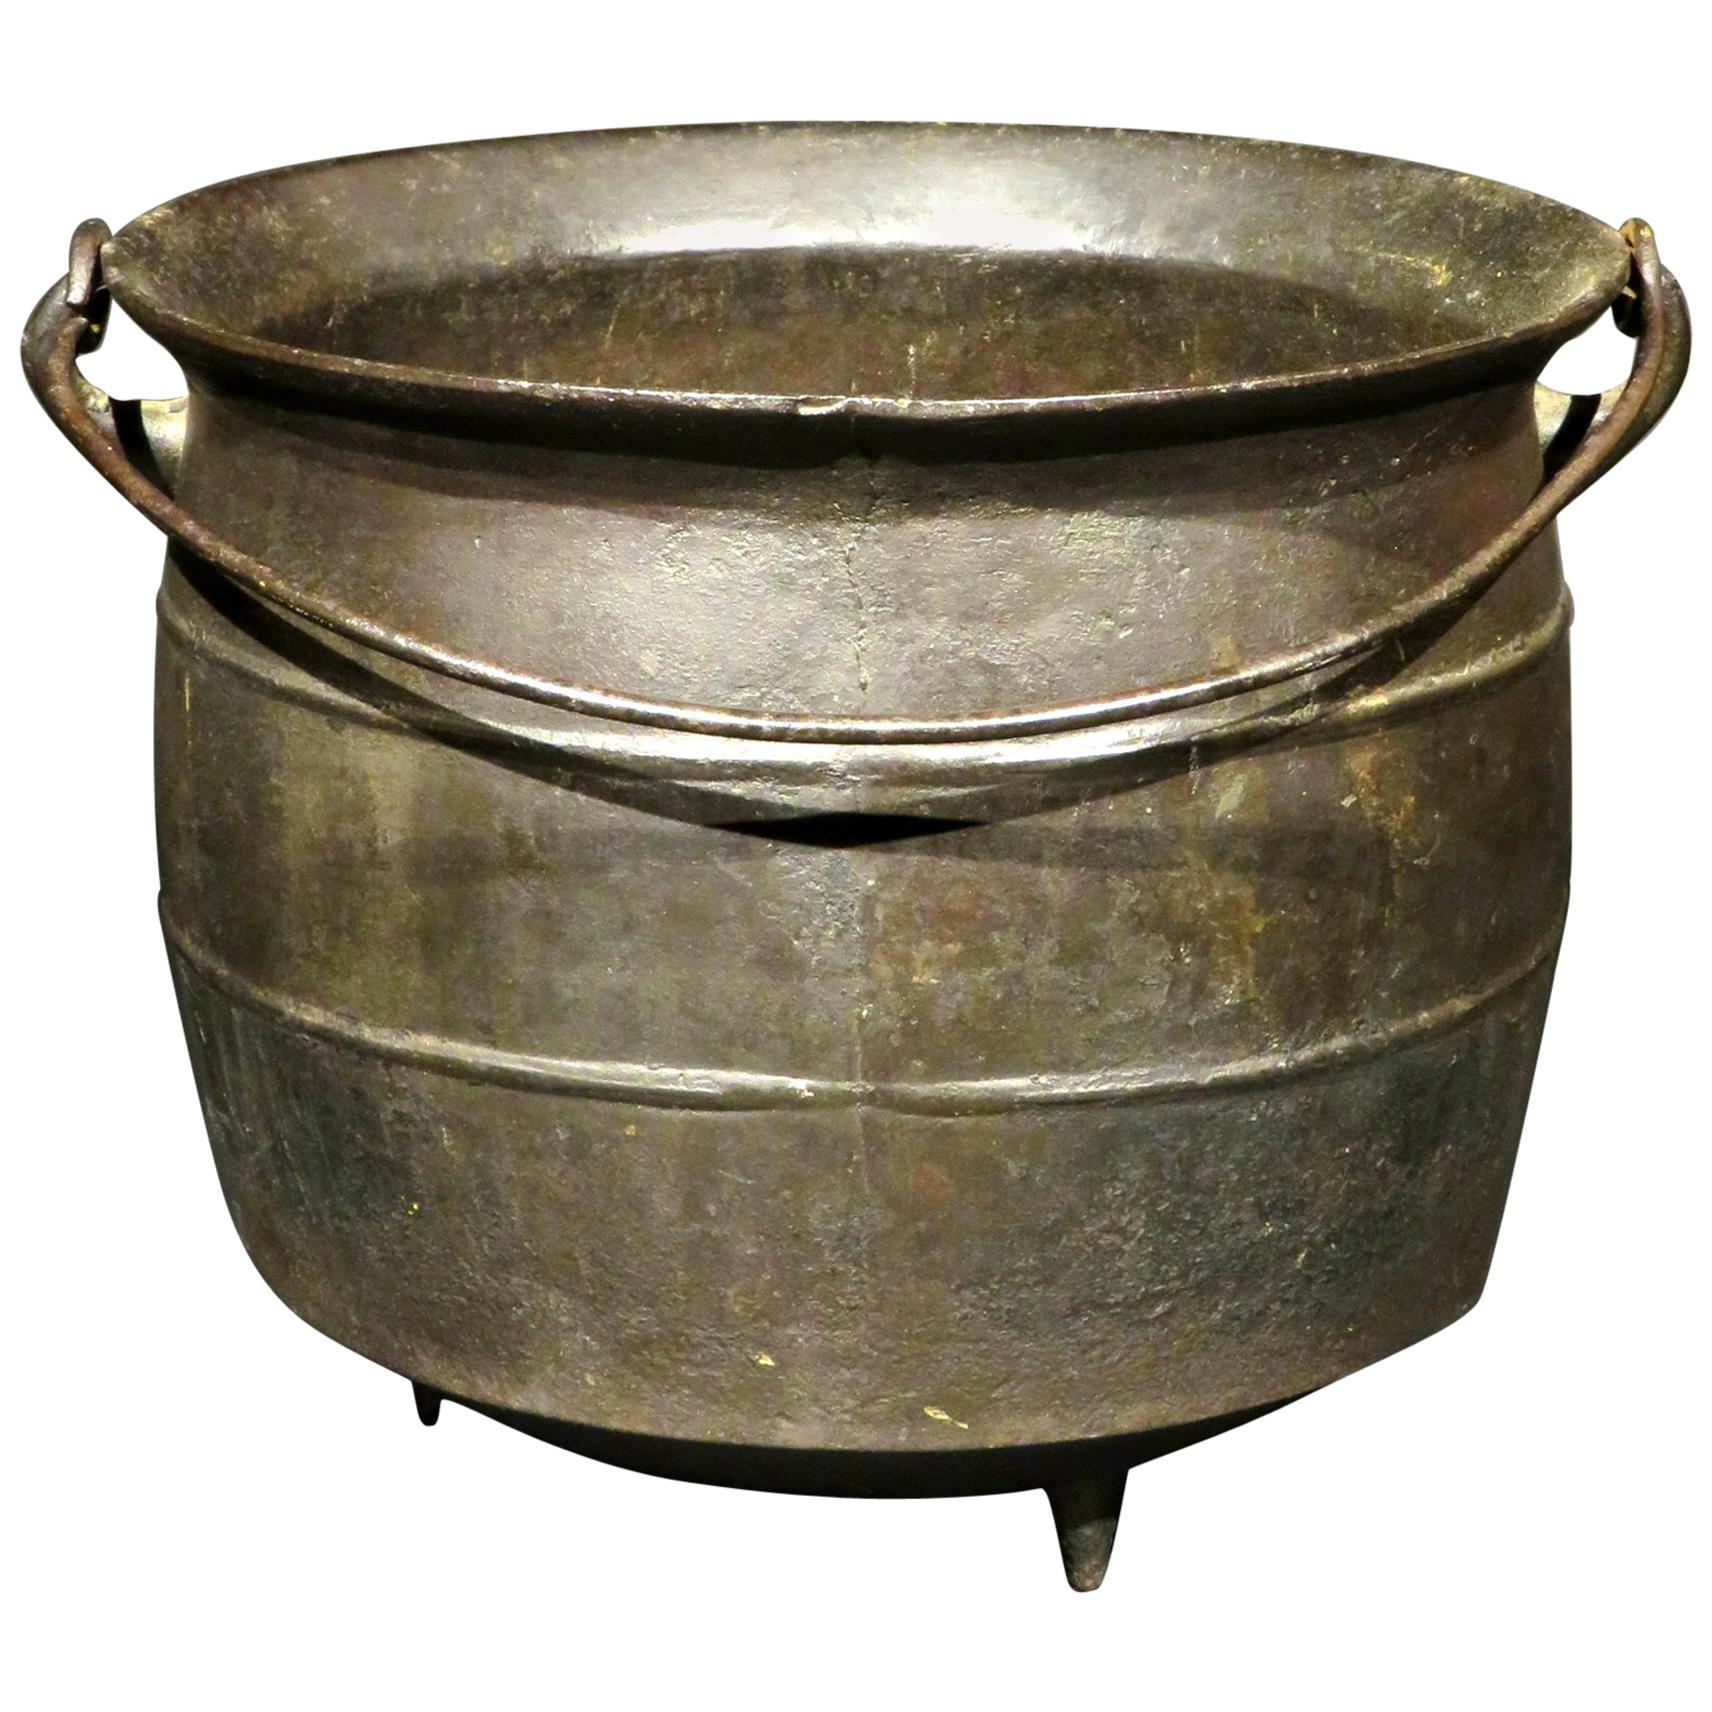 Early 19th Century Cast Iron Cauldron or Kettle, Continental Circa 1800